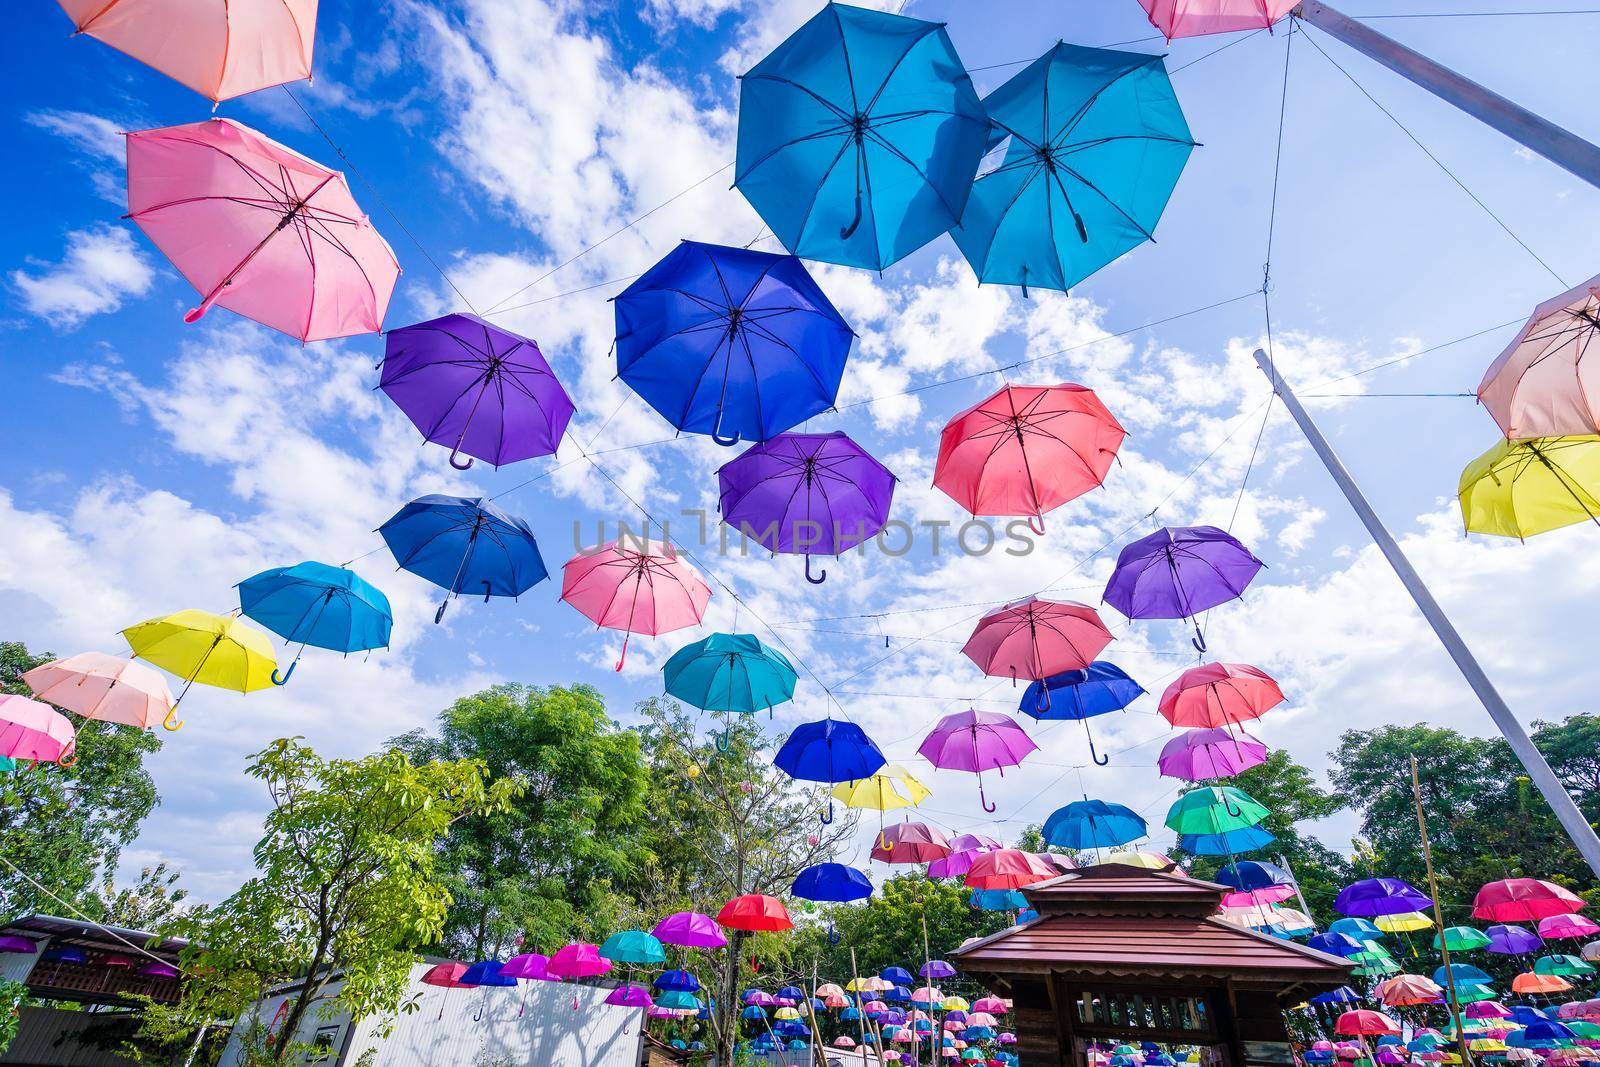 Colorful umbrellas in the sky by domonite